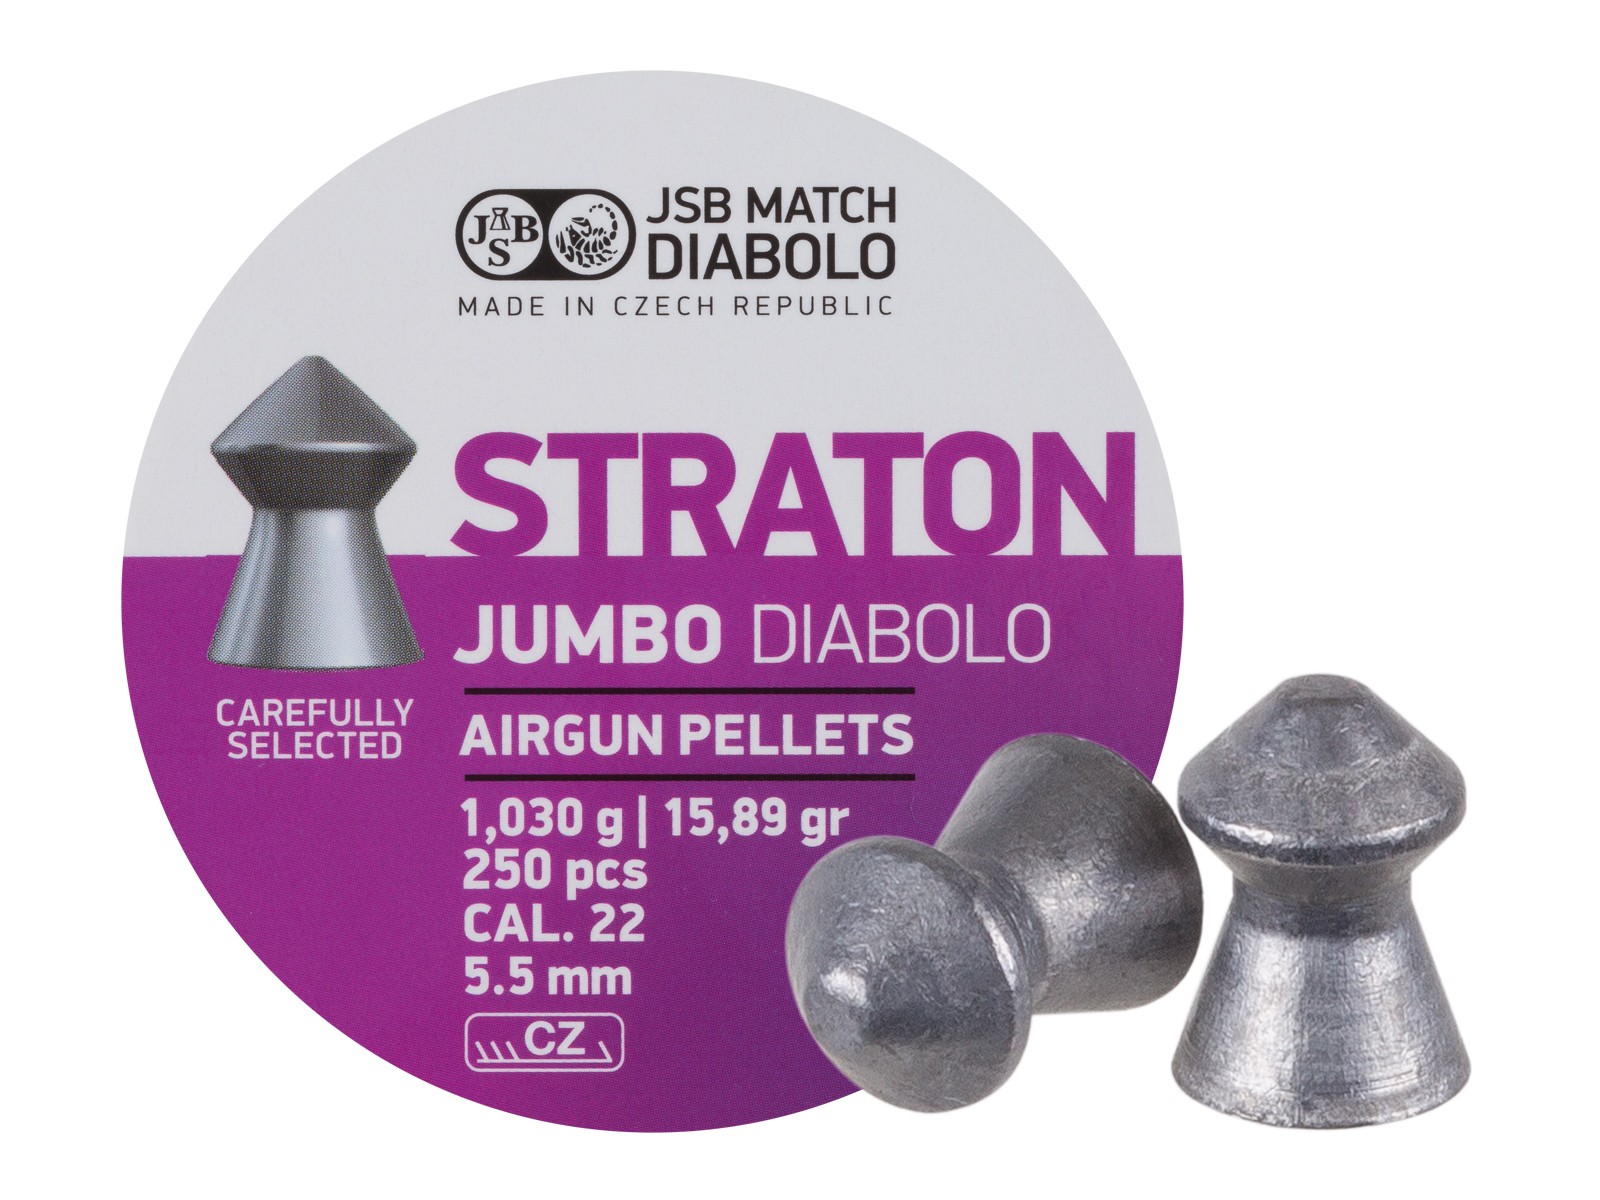 JSB Diabolo Jumbo Straton .22, 15.89gr, Pointed, 250 ct